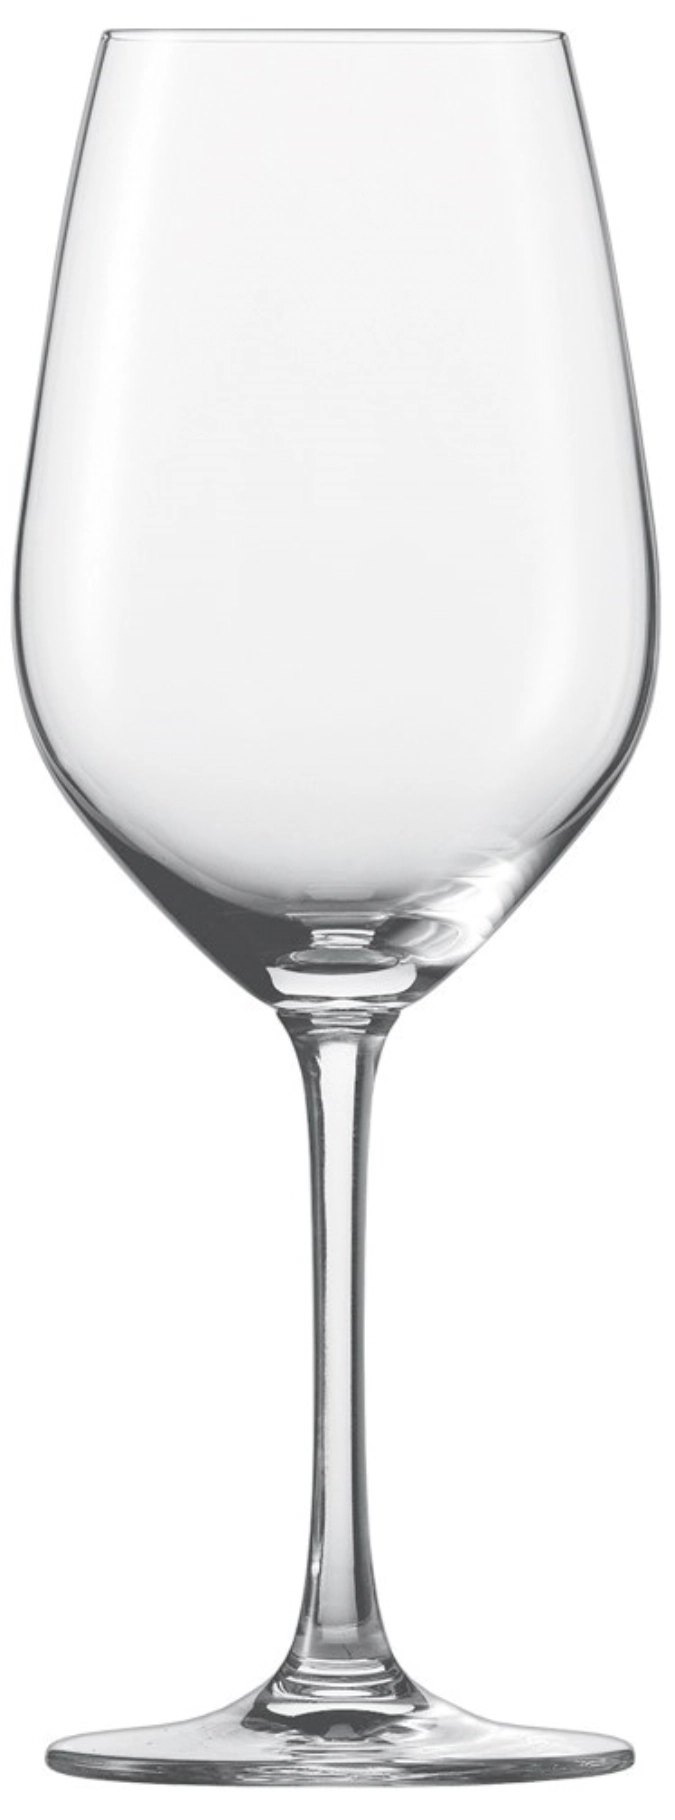 Vina 0 Burgunder-/Rotweinkelch 415ml